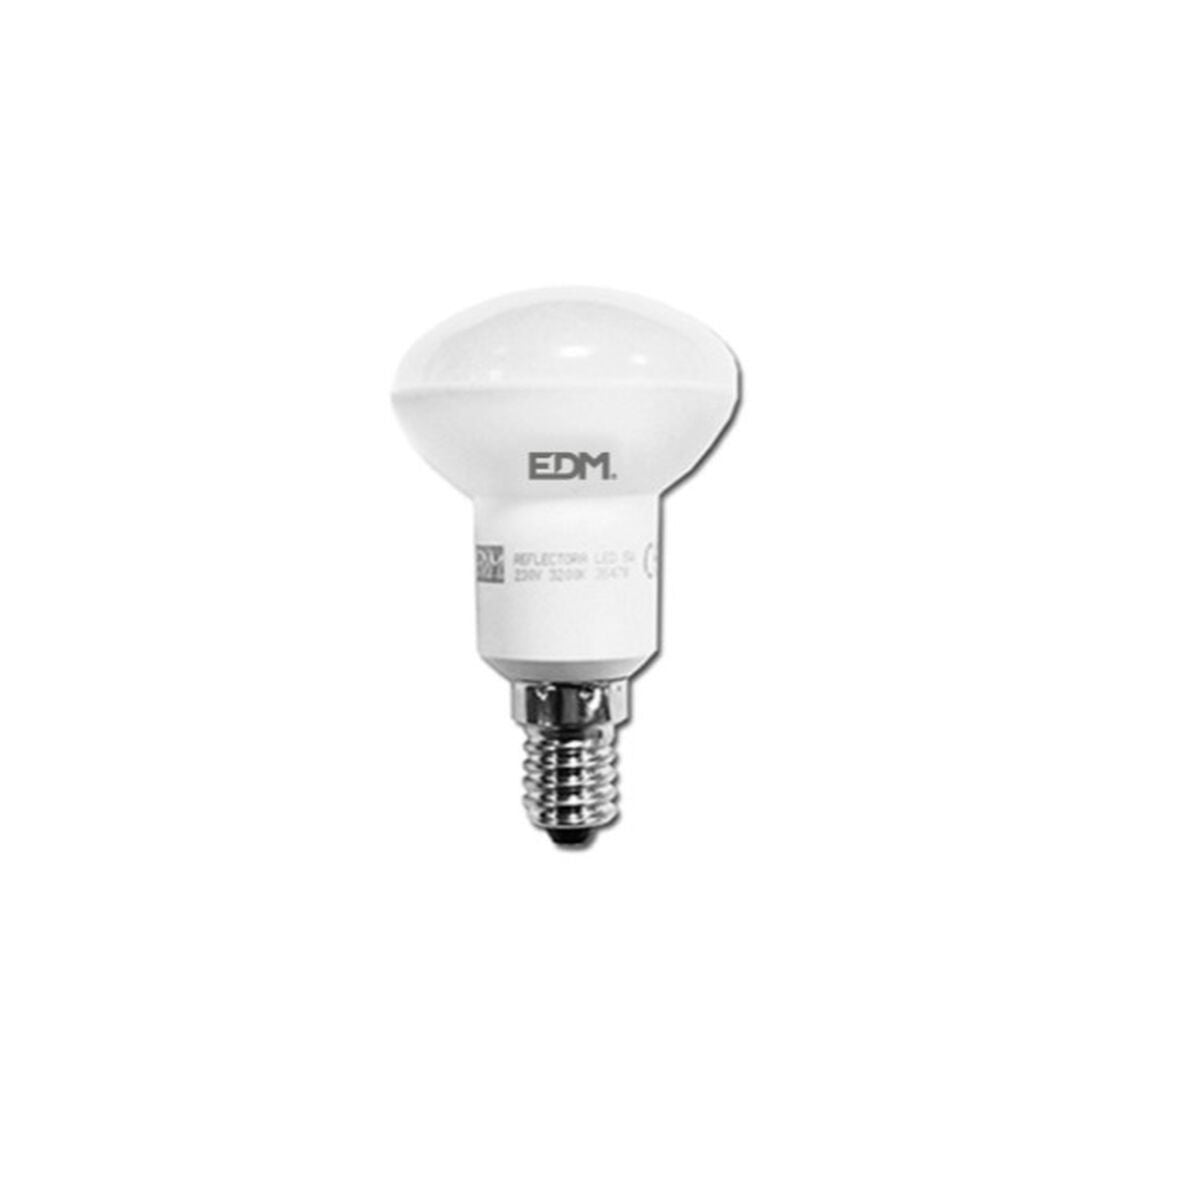 LED lamp EDM Reflector G 5 W E14 350 lm Ø 4,5 x 8 cm (6400 K)